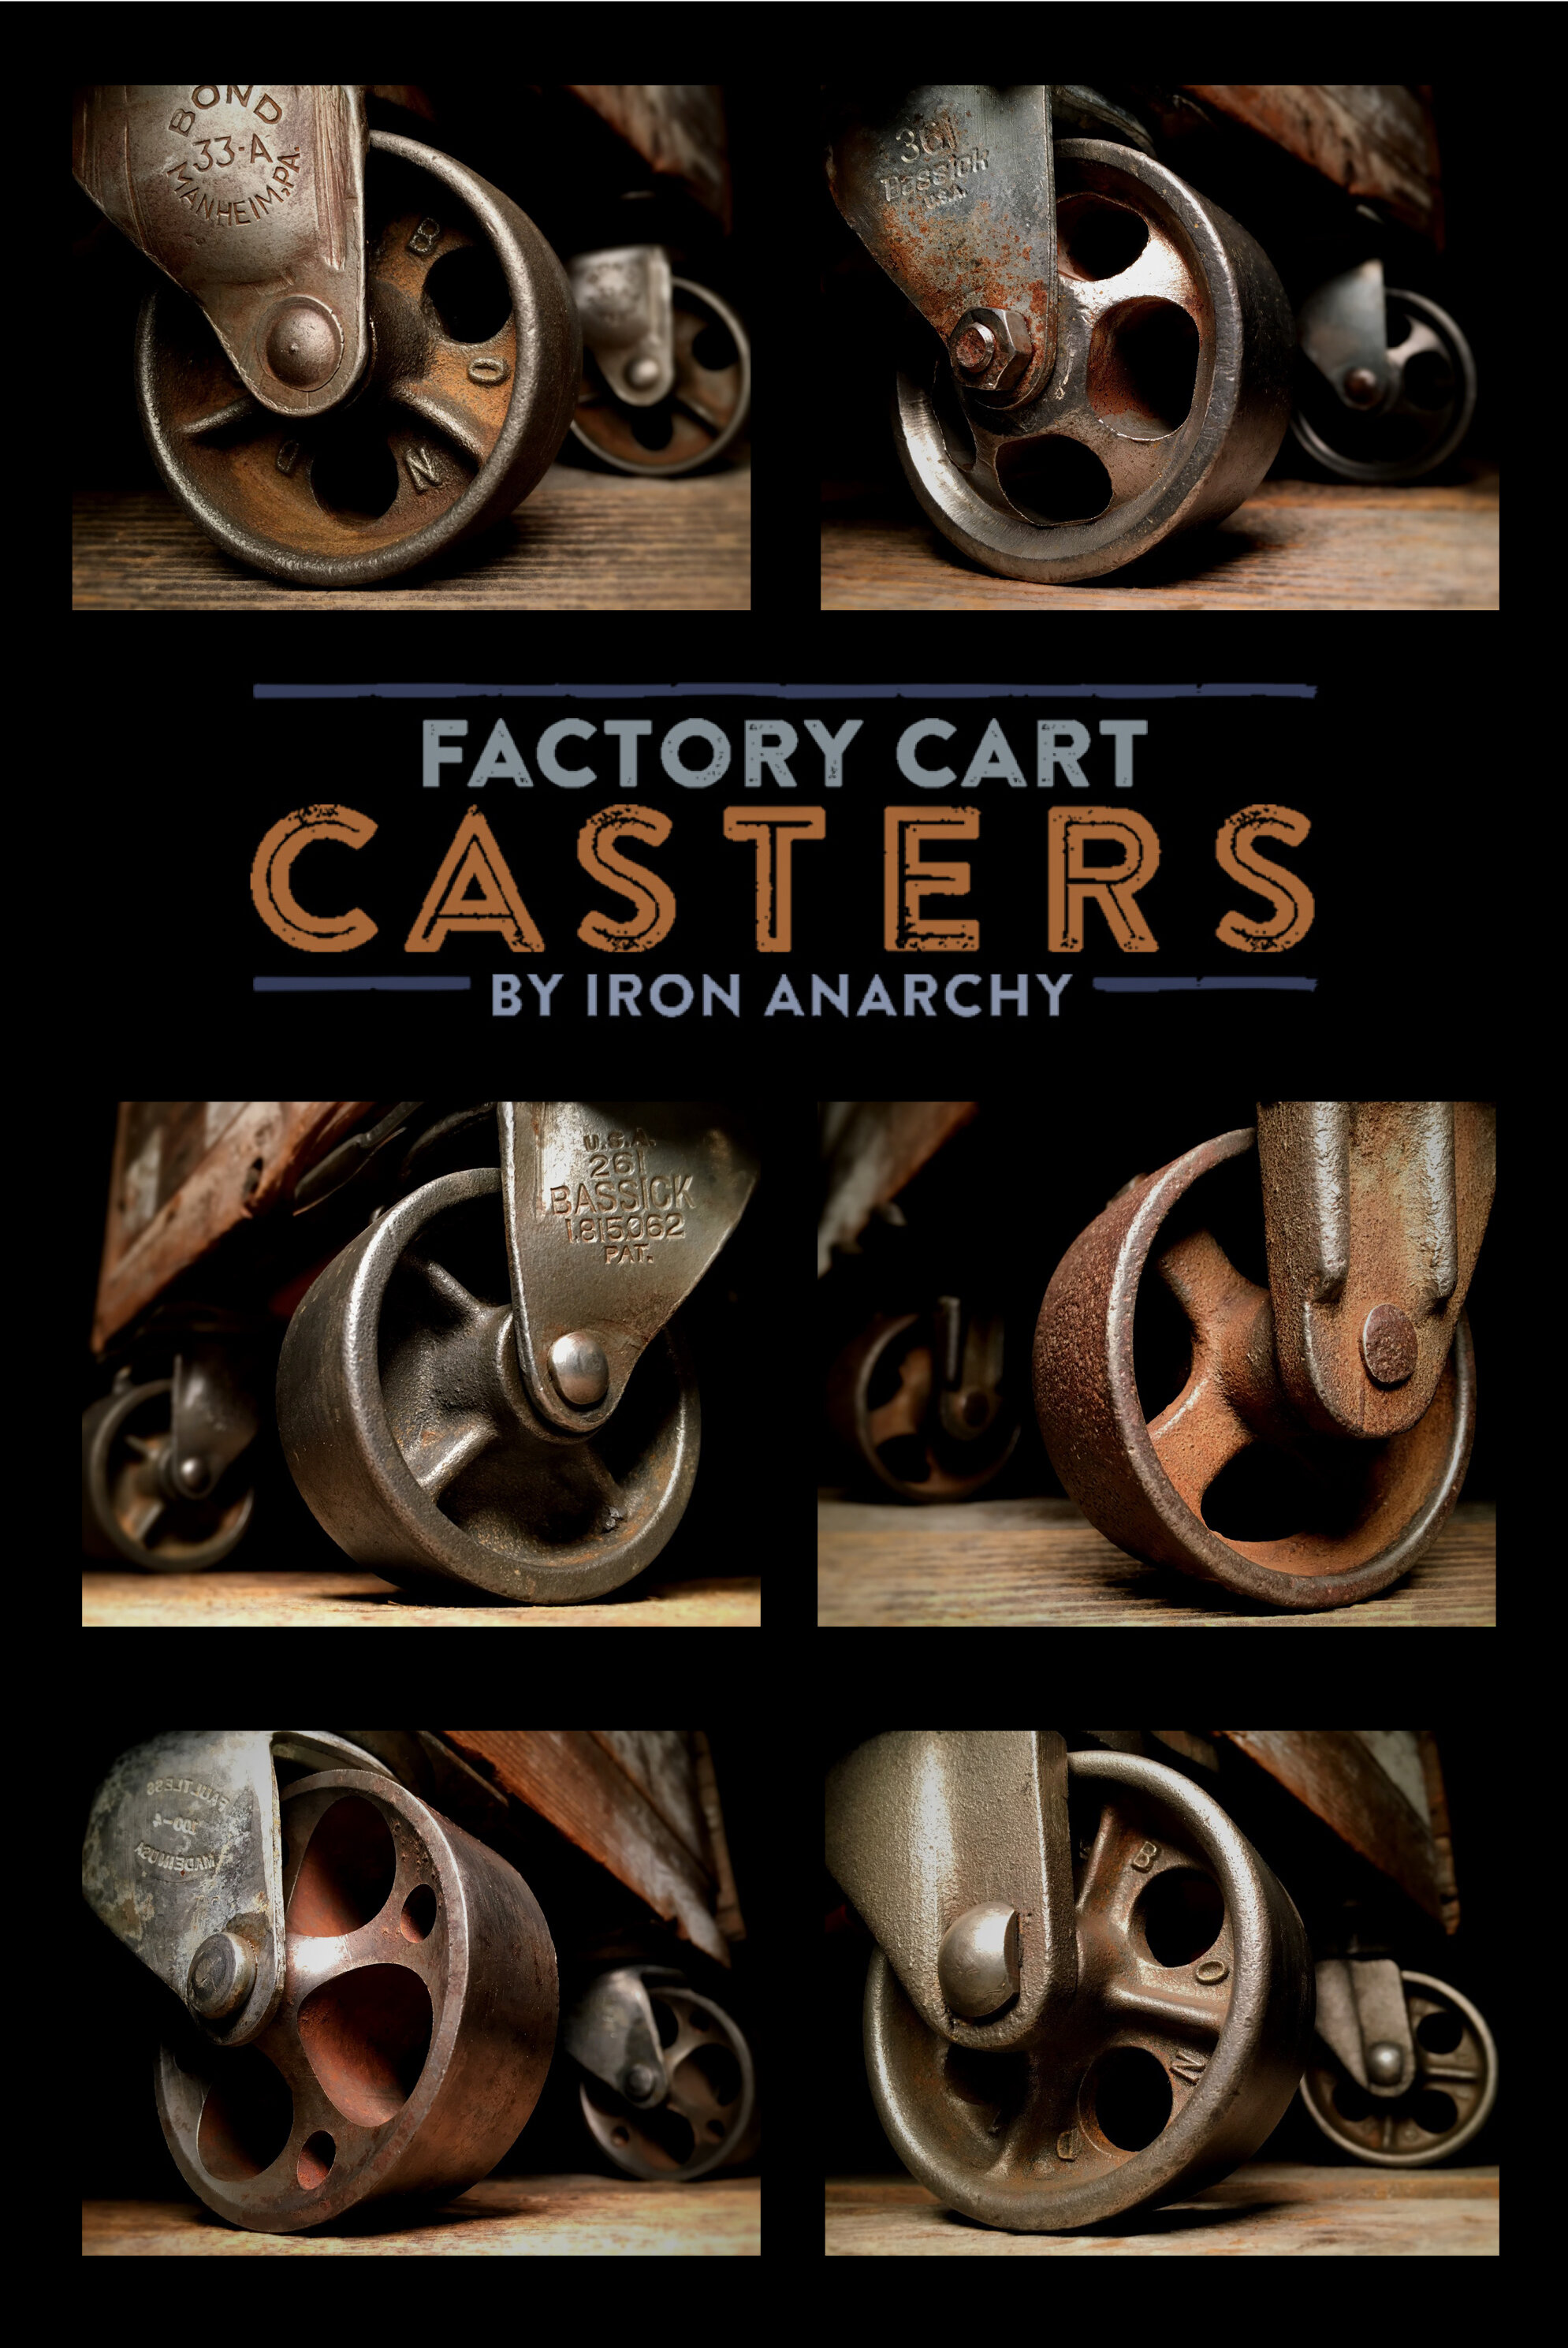 Antique Industrial Casters, Vintage Industrial Caster Wheels (Copy)